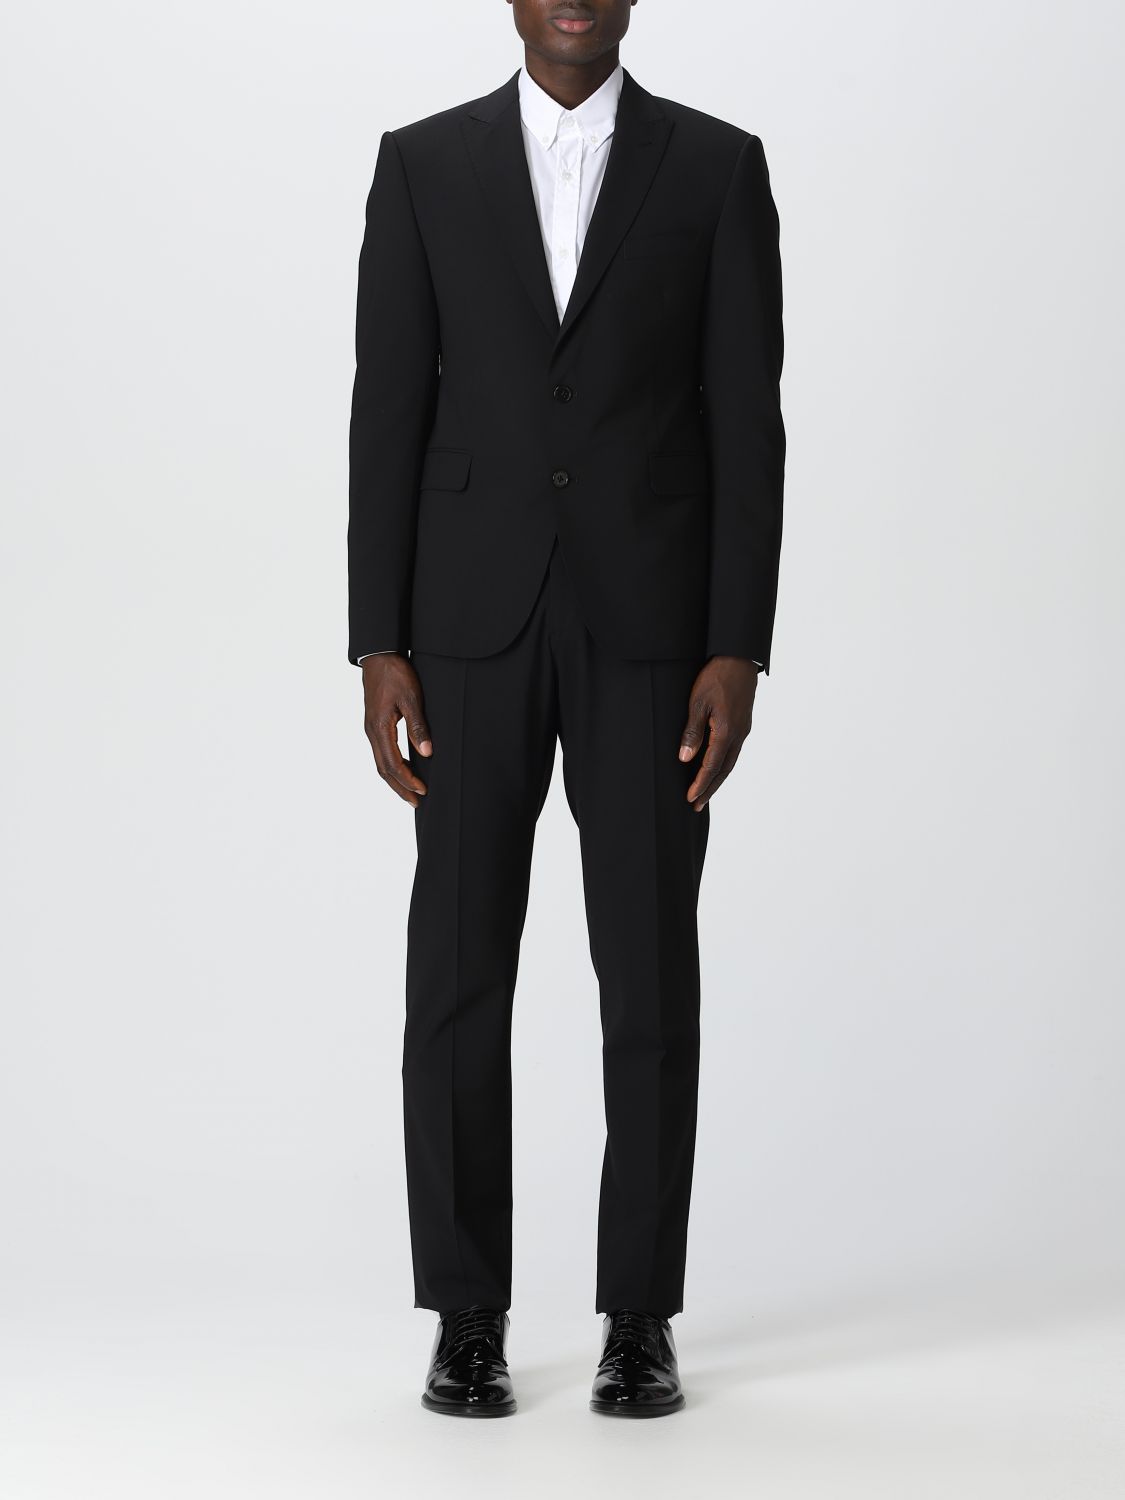 EMPORIO ARMANI: suit for man - Black | Emporio Armani suit D41VMA01506 ...